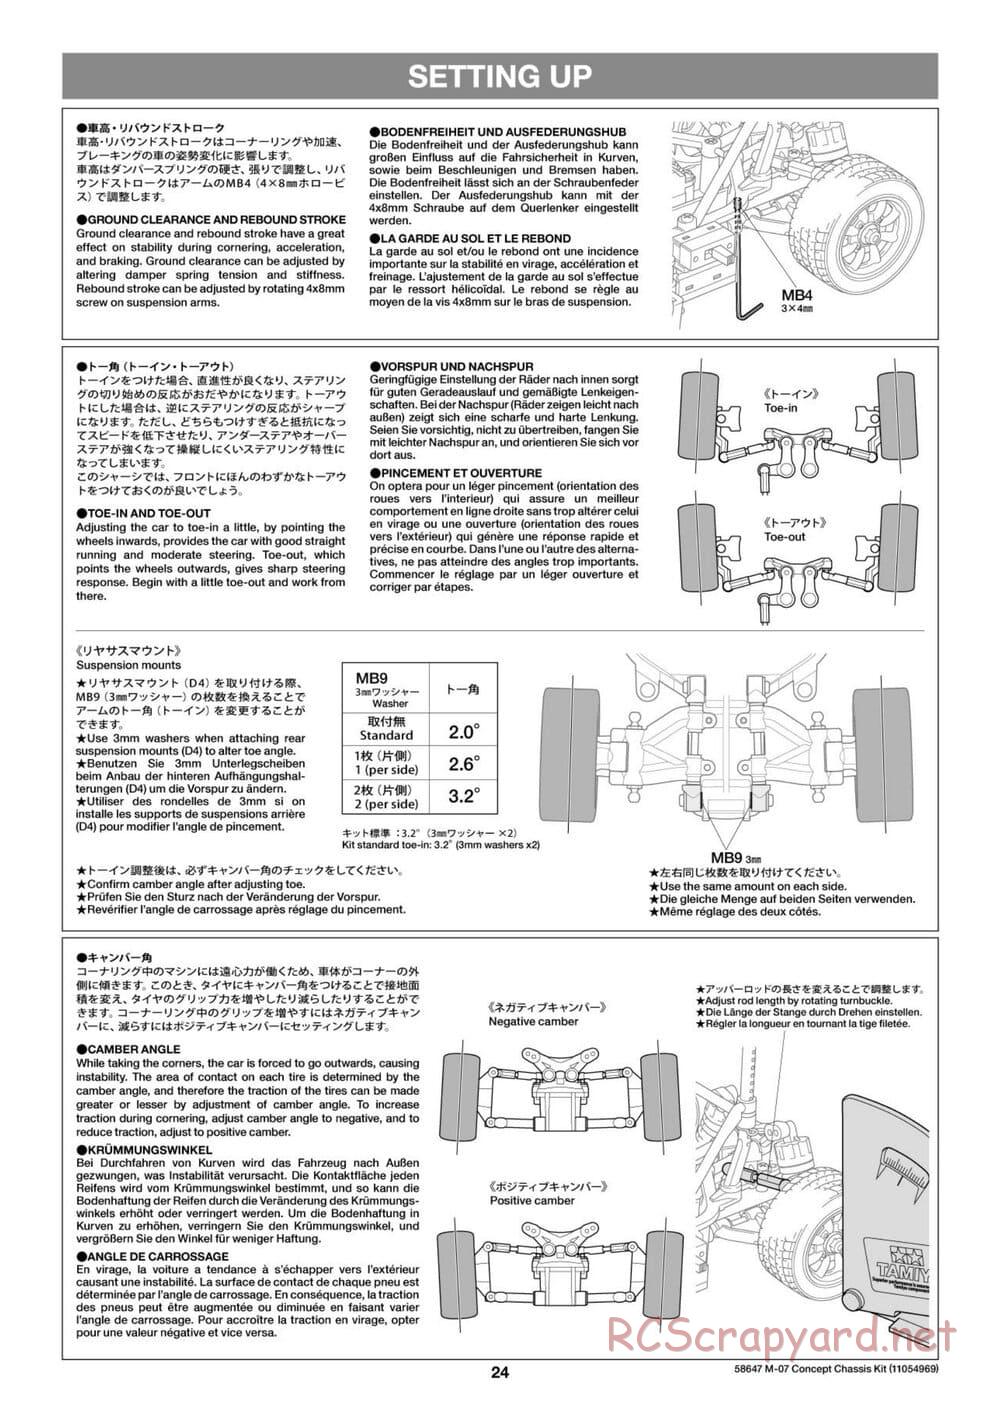 Tamiya - M-07 Concept Chassis - Manual - Page 24